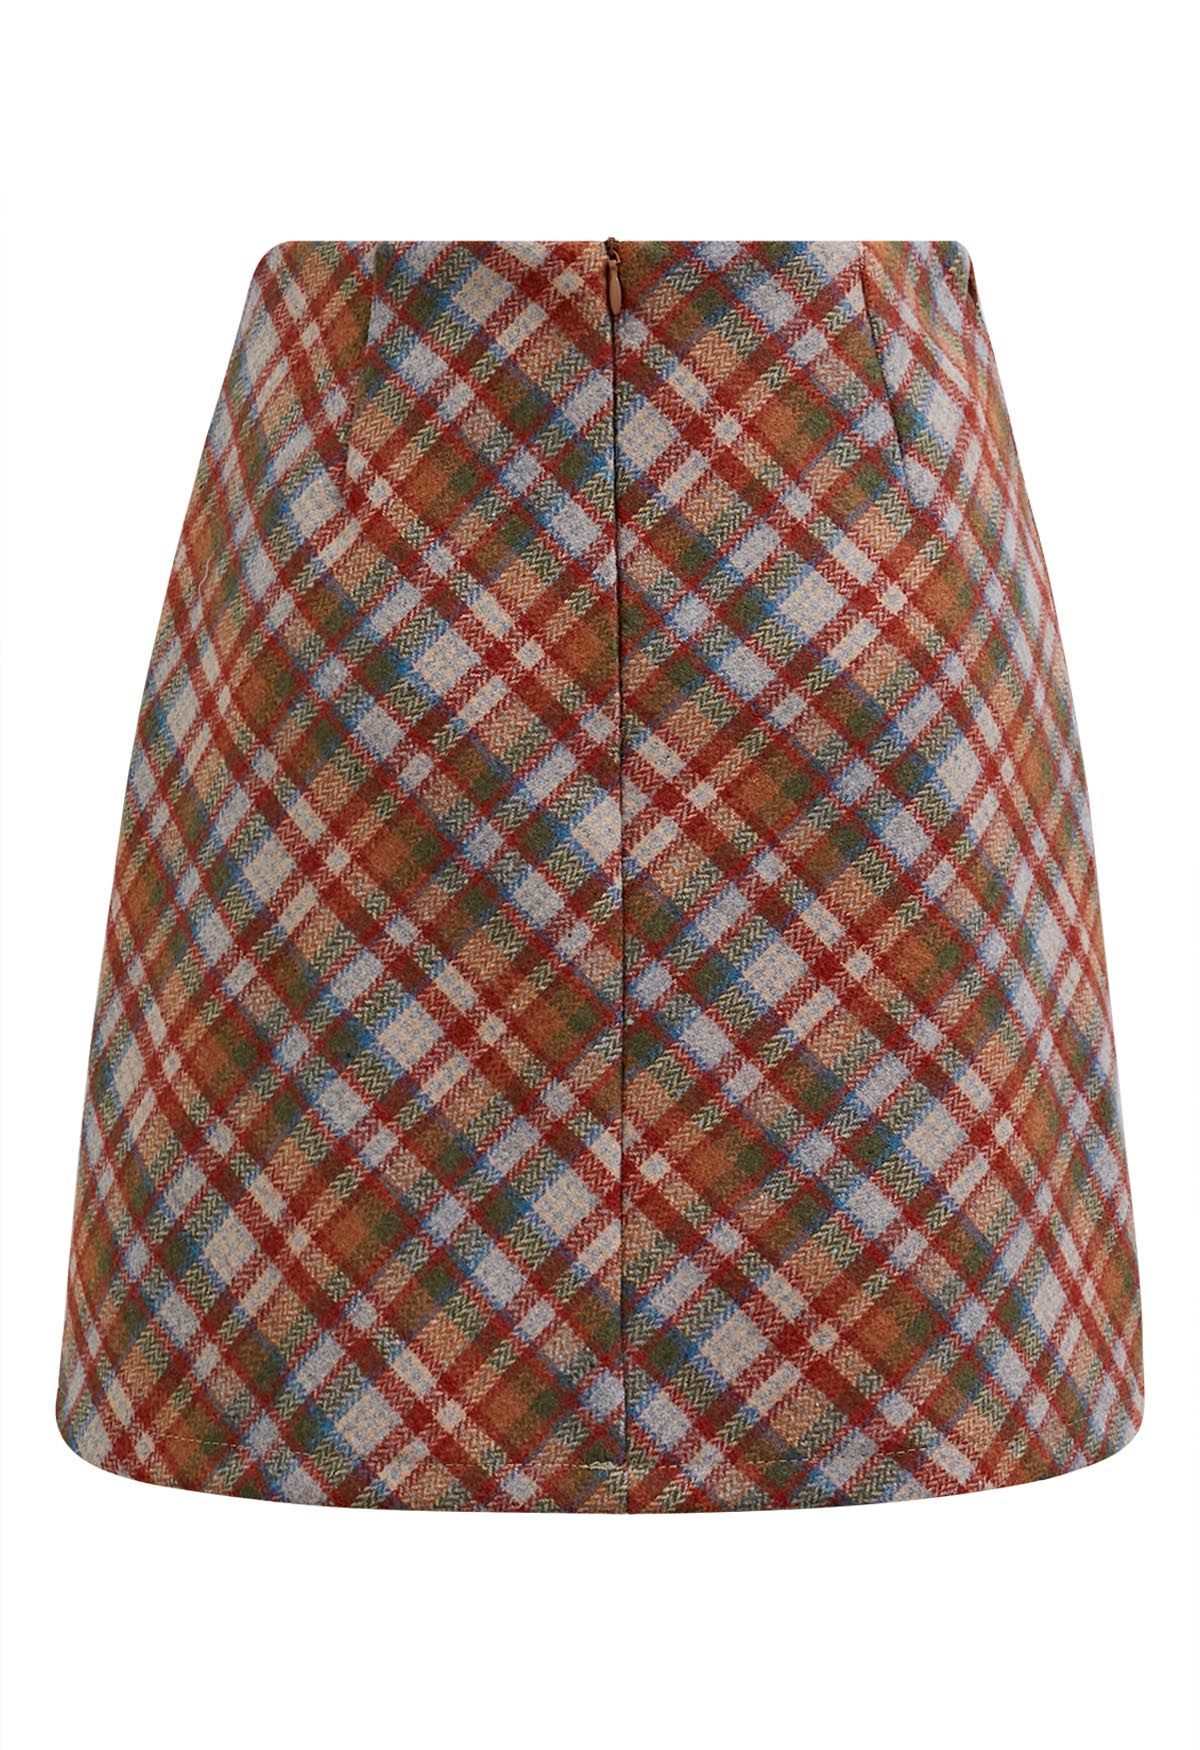 Retro Plaid Wool-Blend Mini Bud Skirt in Red